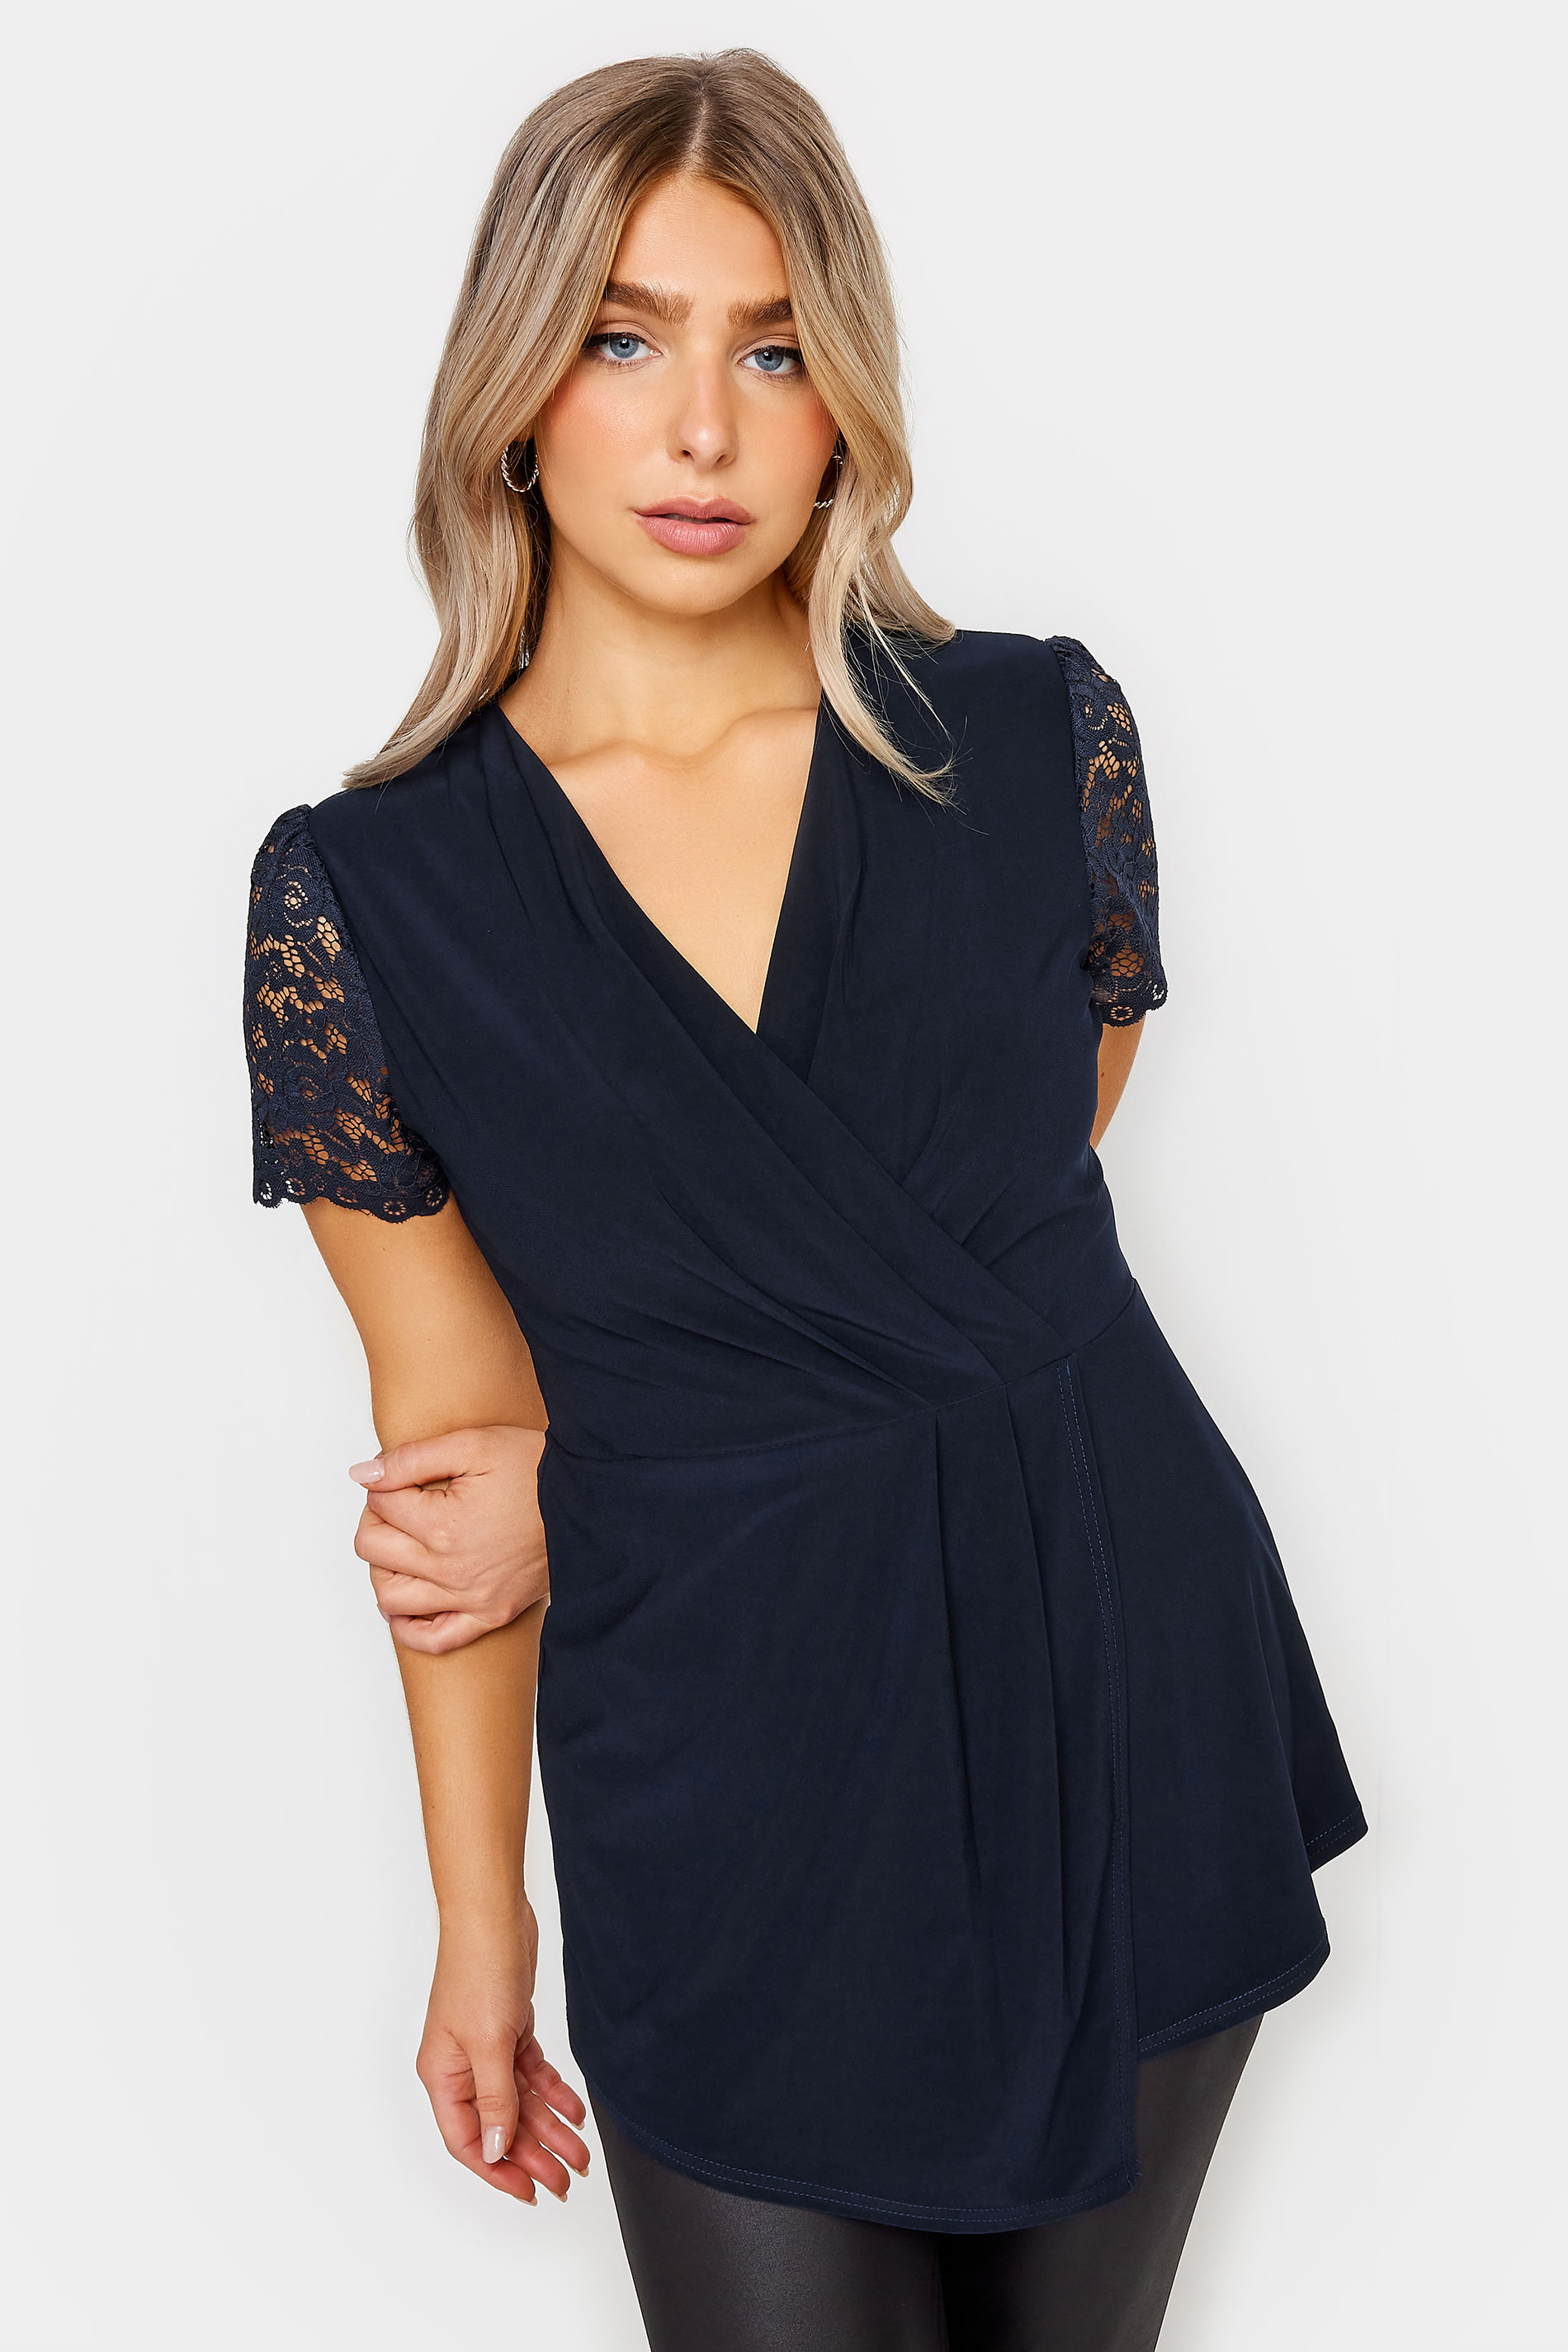 M&Co Navy Blue Lace Sleeve Asymmetric Wrap Top | M&Co 2